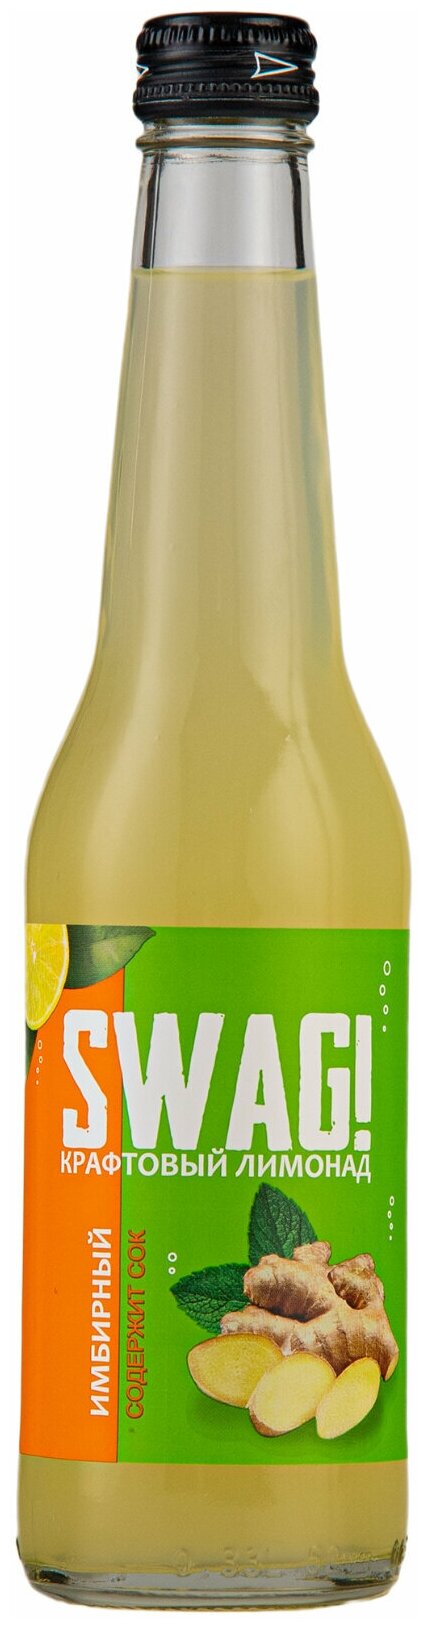 Крафтовый лимонад SWAG! Ginger (Имбирь), стеклянная бутылка 0,33 литра ( 330 мл.) - 12 штук - фотография № 3